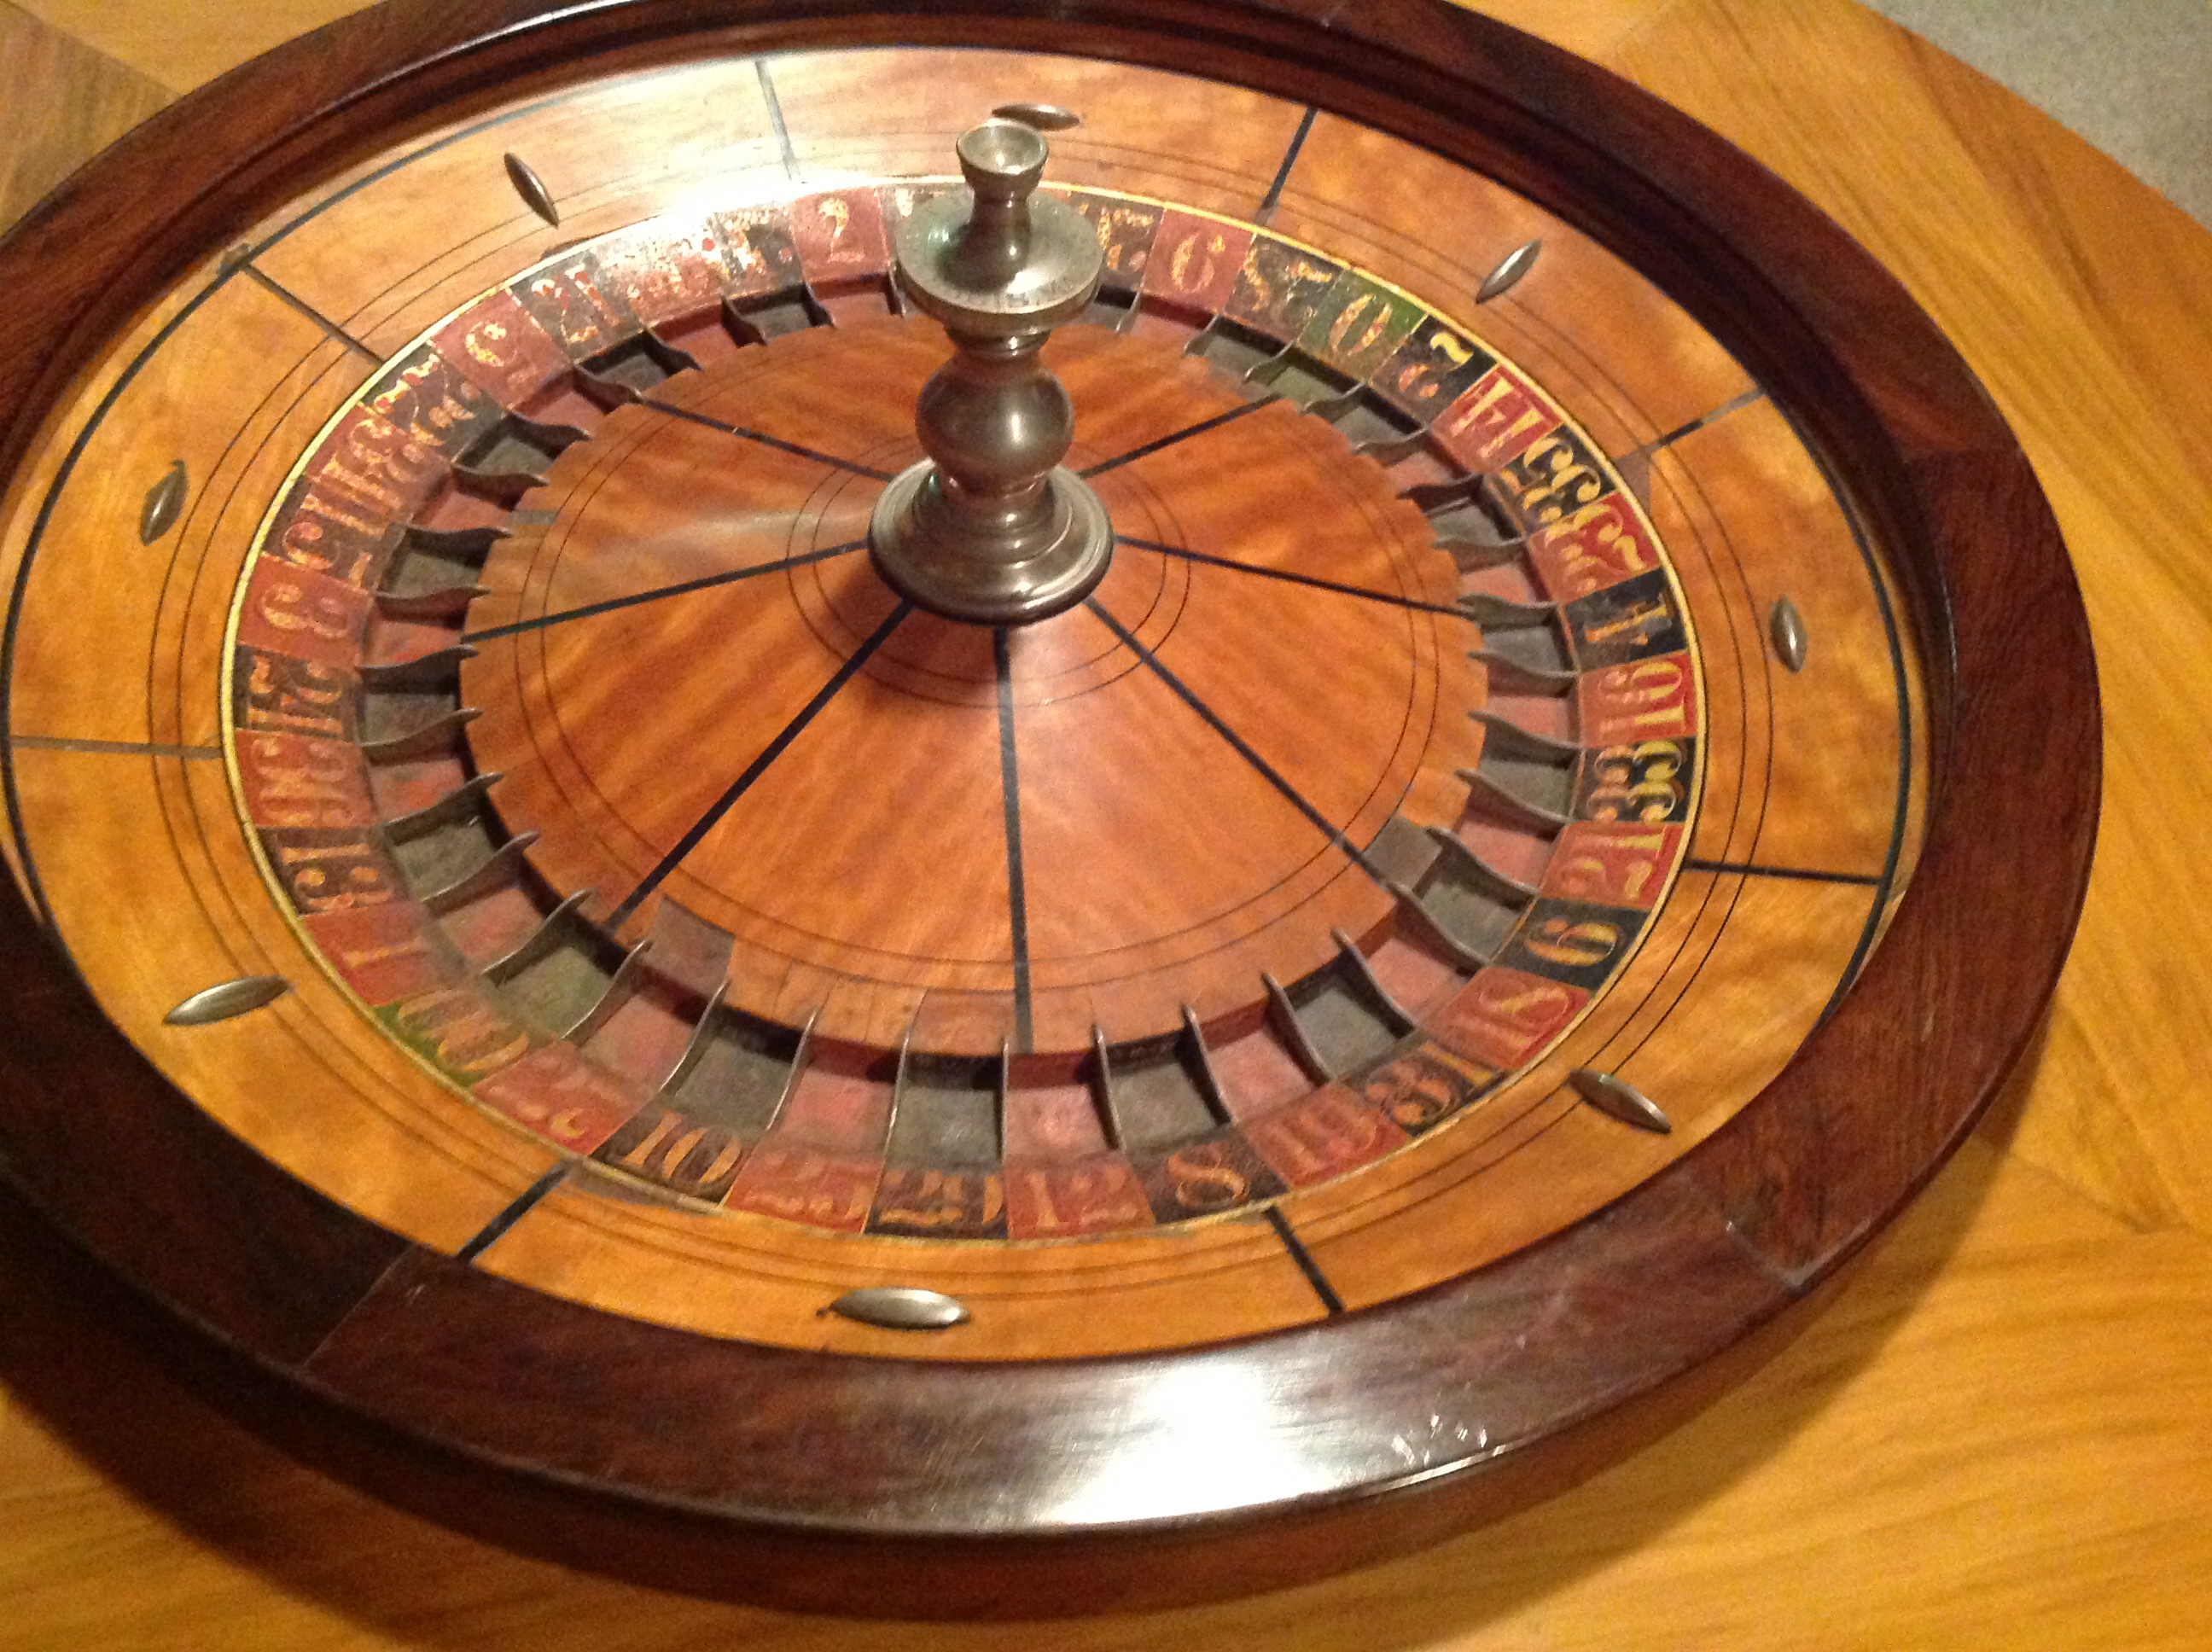 roulette table wheel